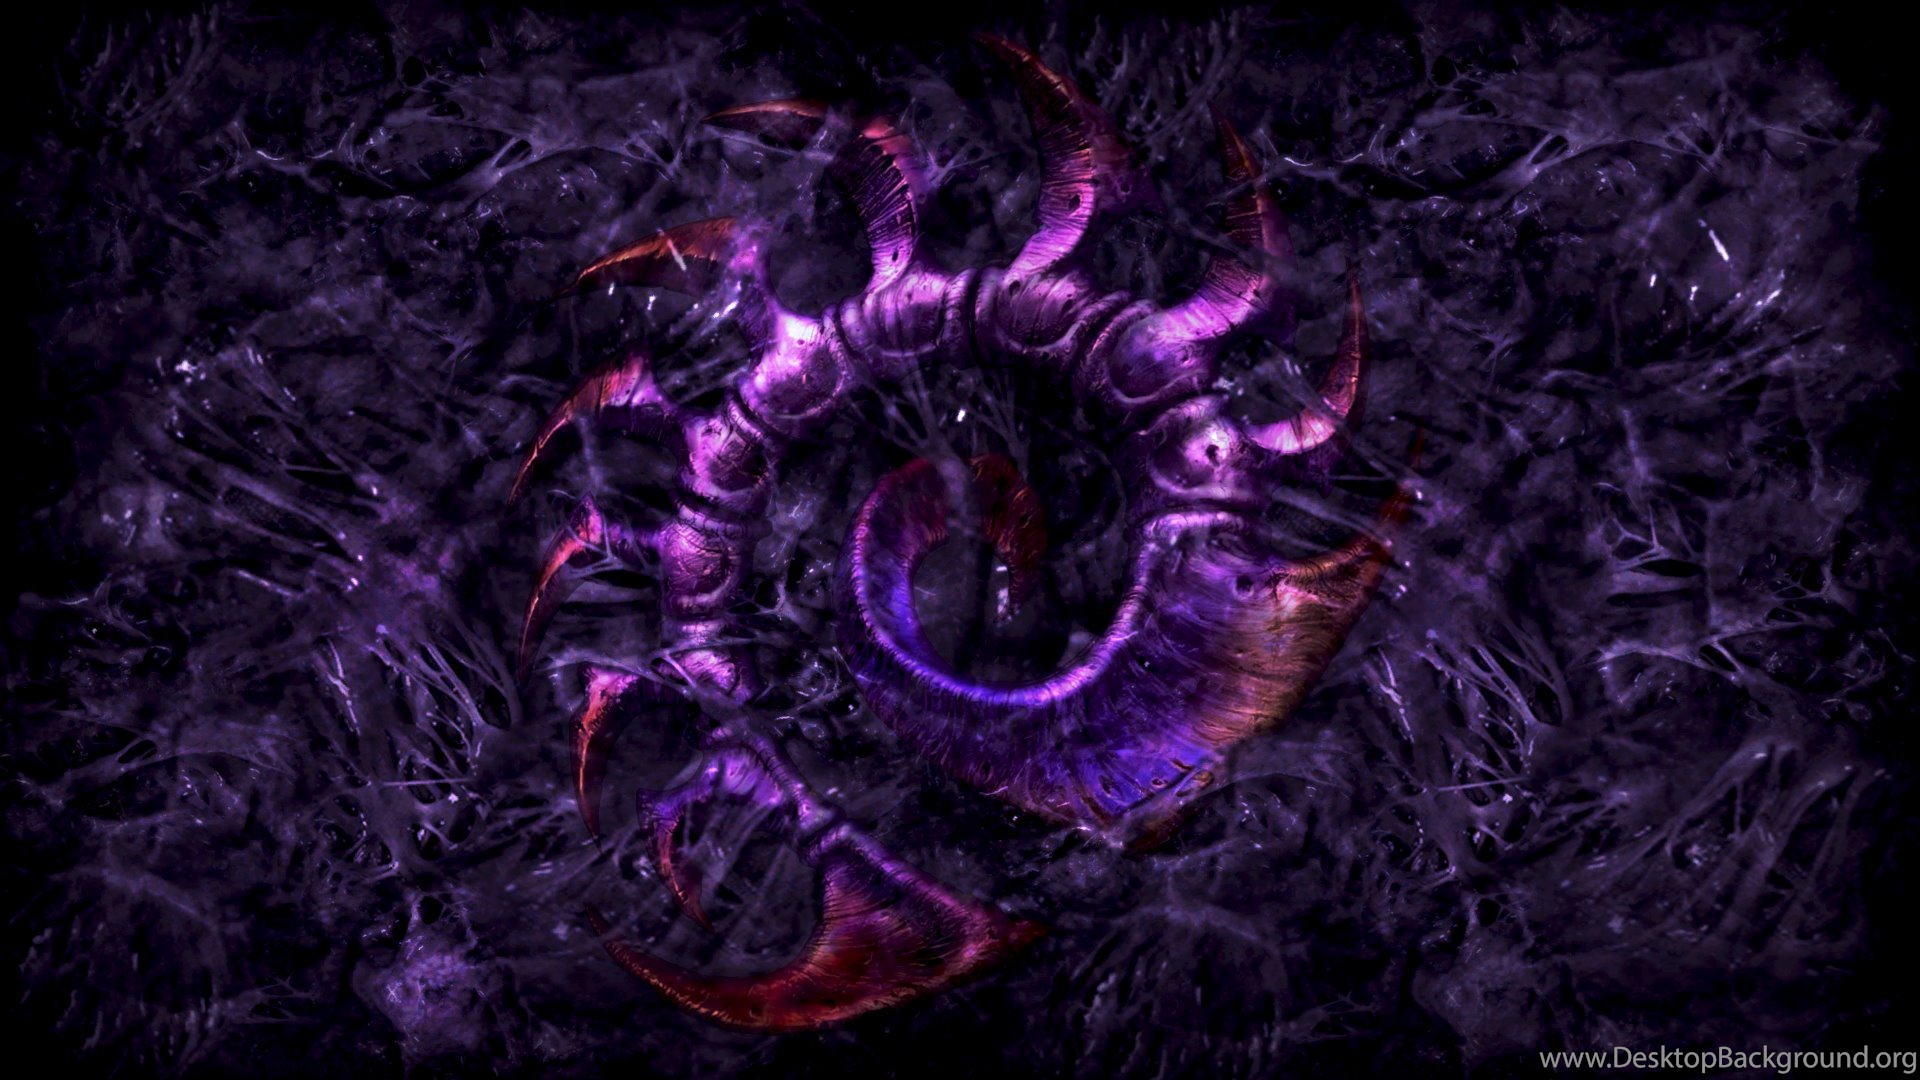 zerg wallpaper,fractal art,purple,violet,art,darkness